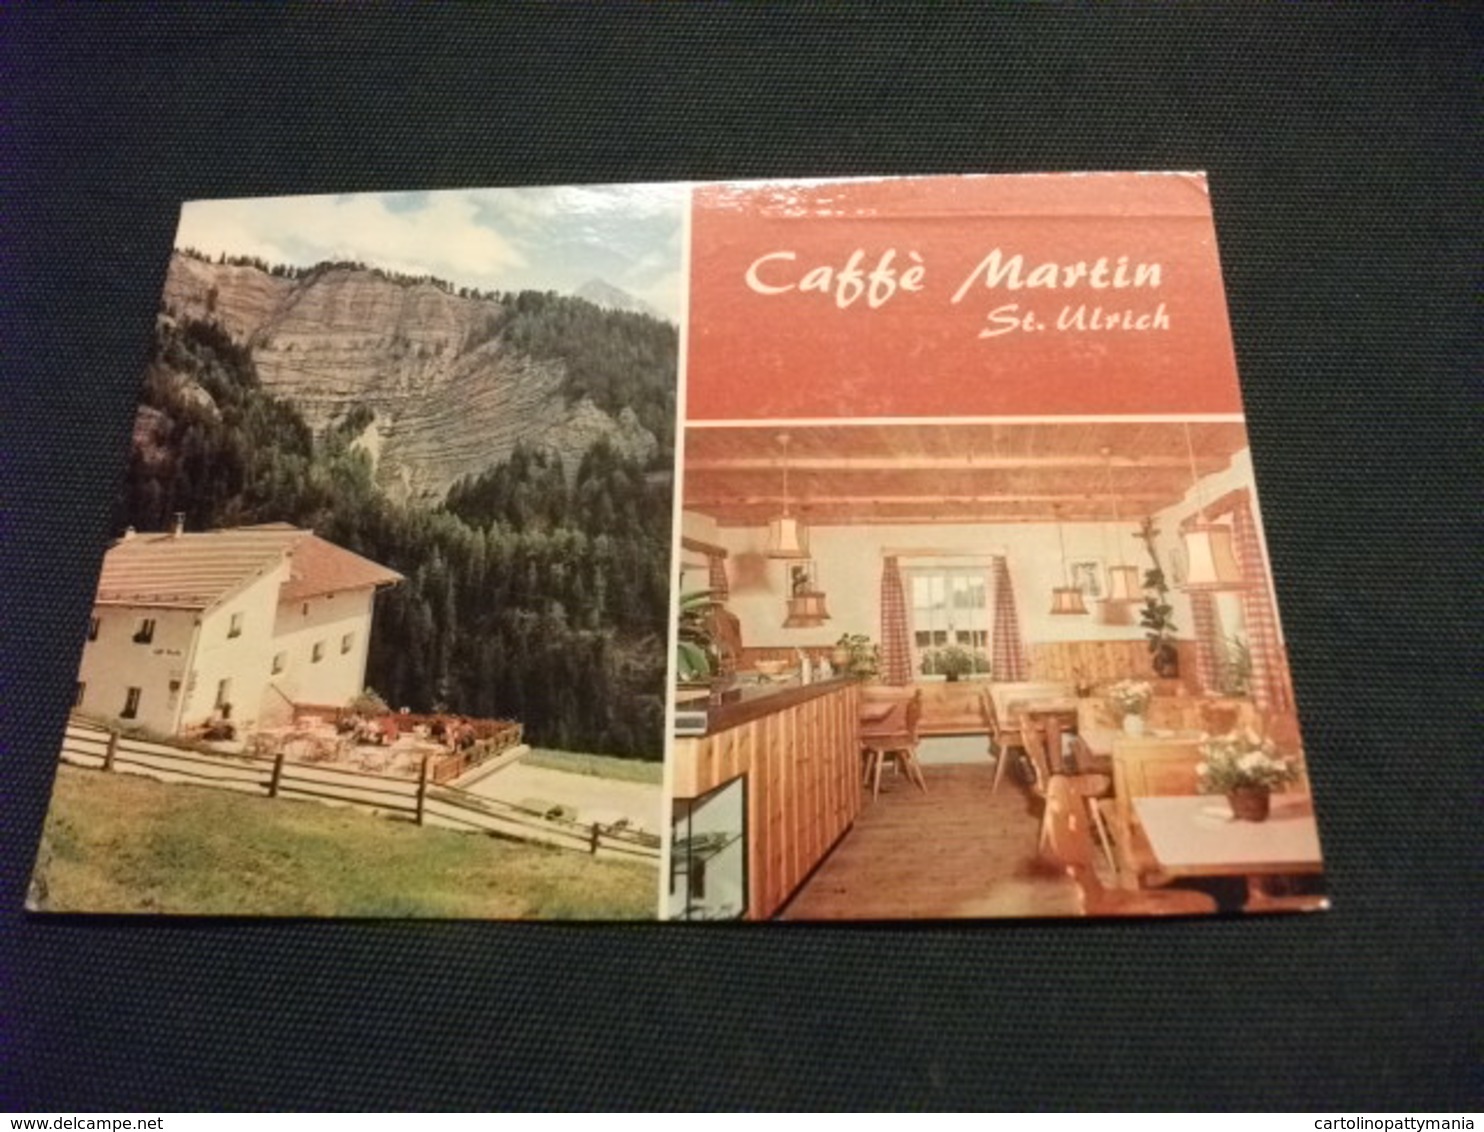 CAFFE' MARTIN ST. ULRICH ORTISEI BOLZANO - Caffé